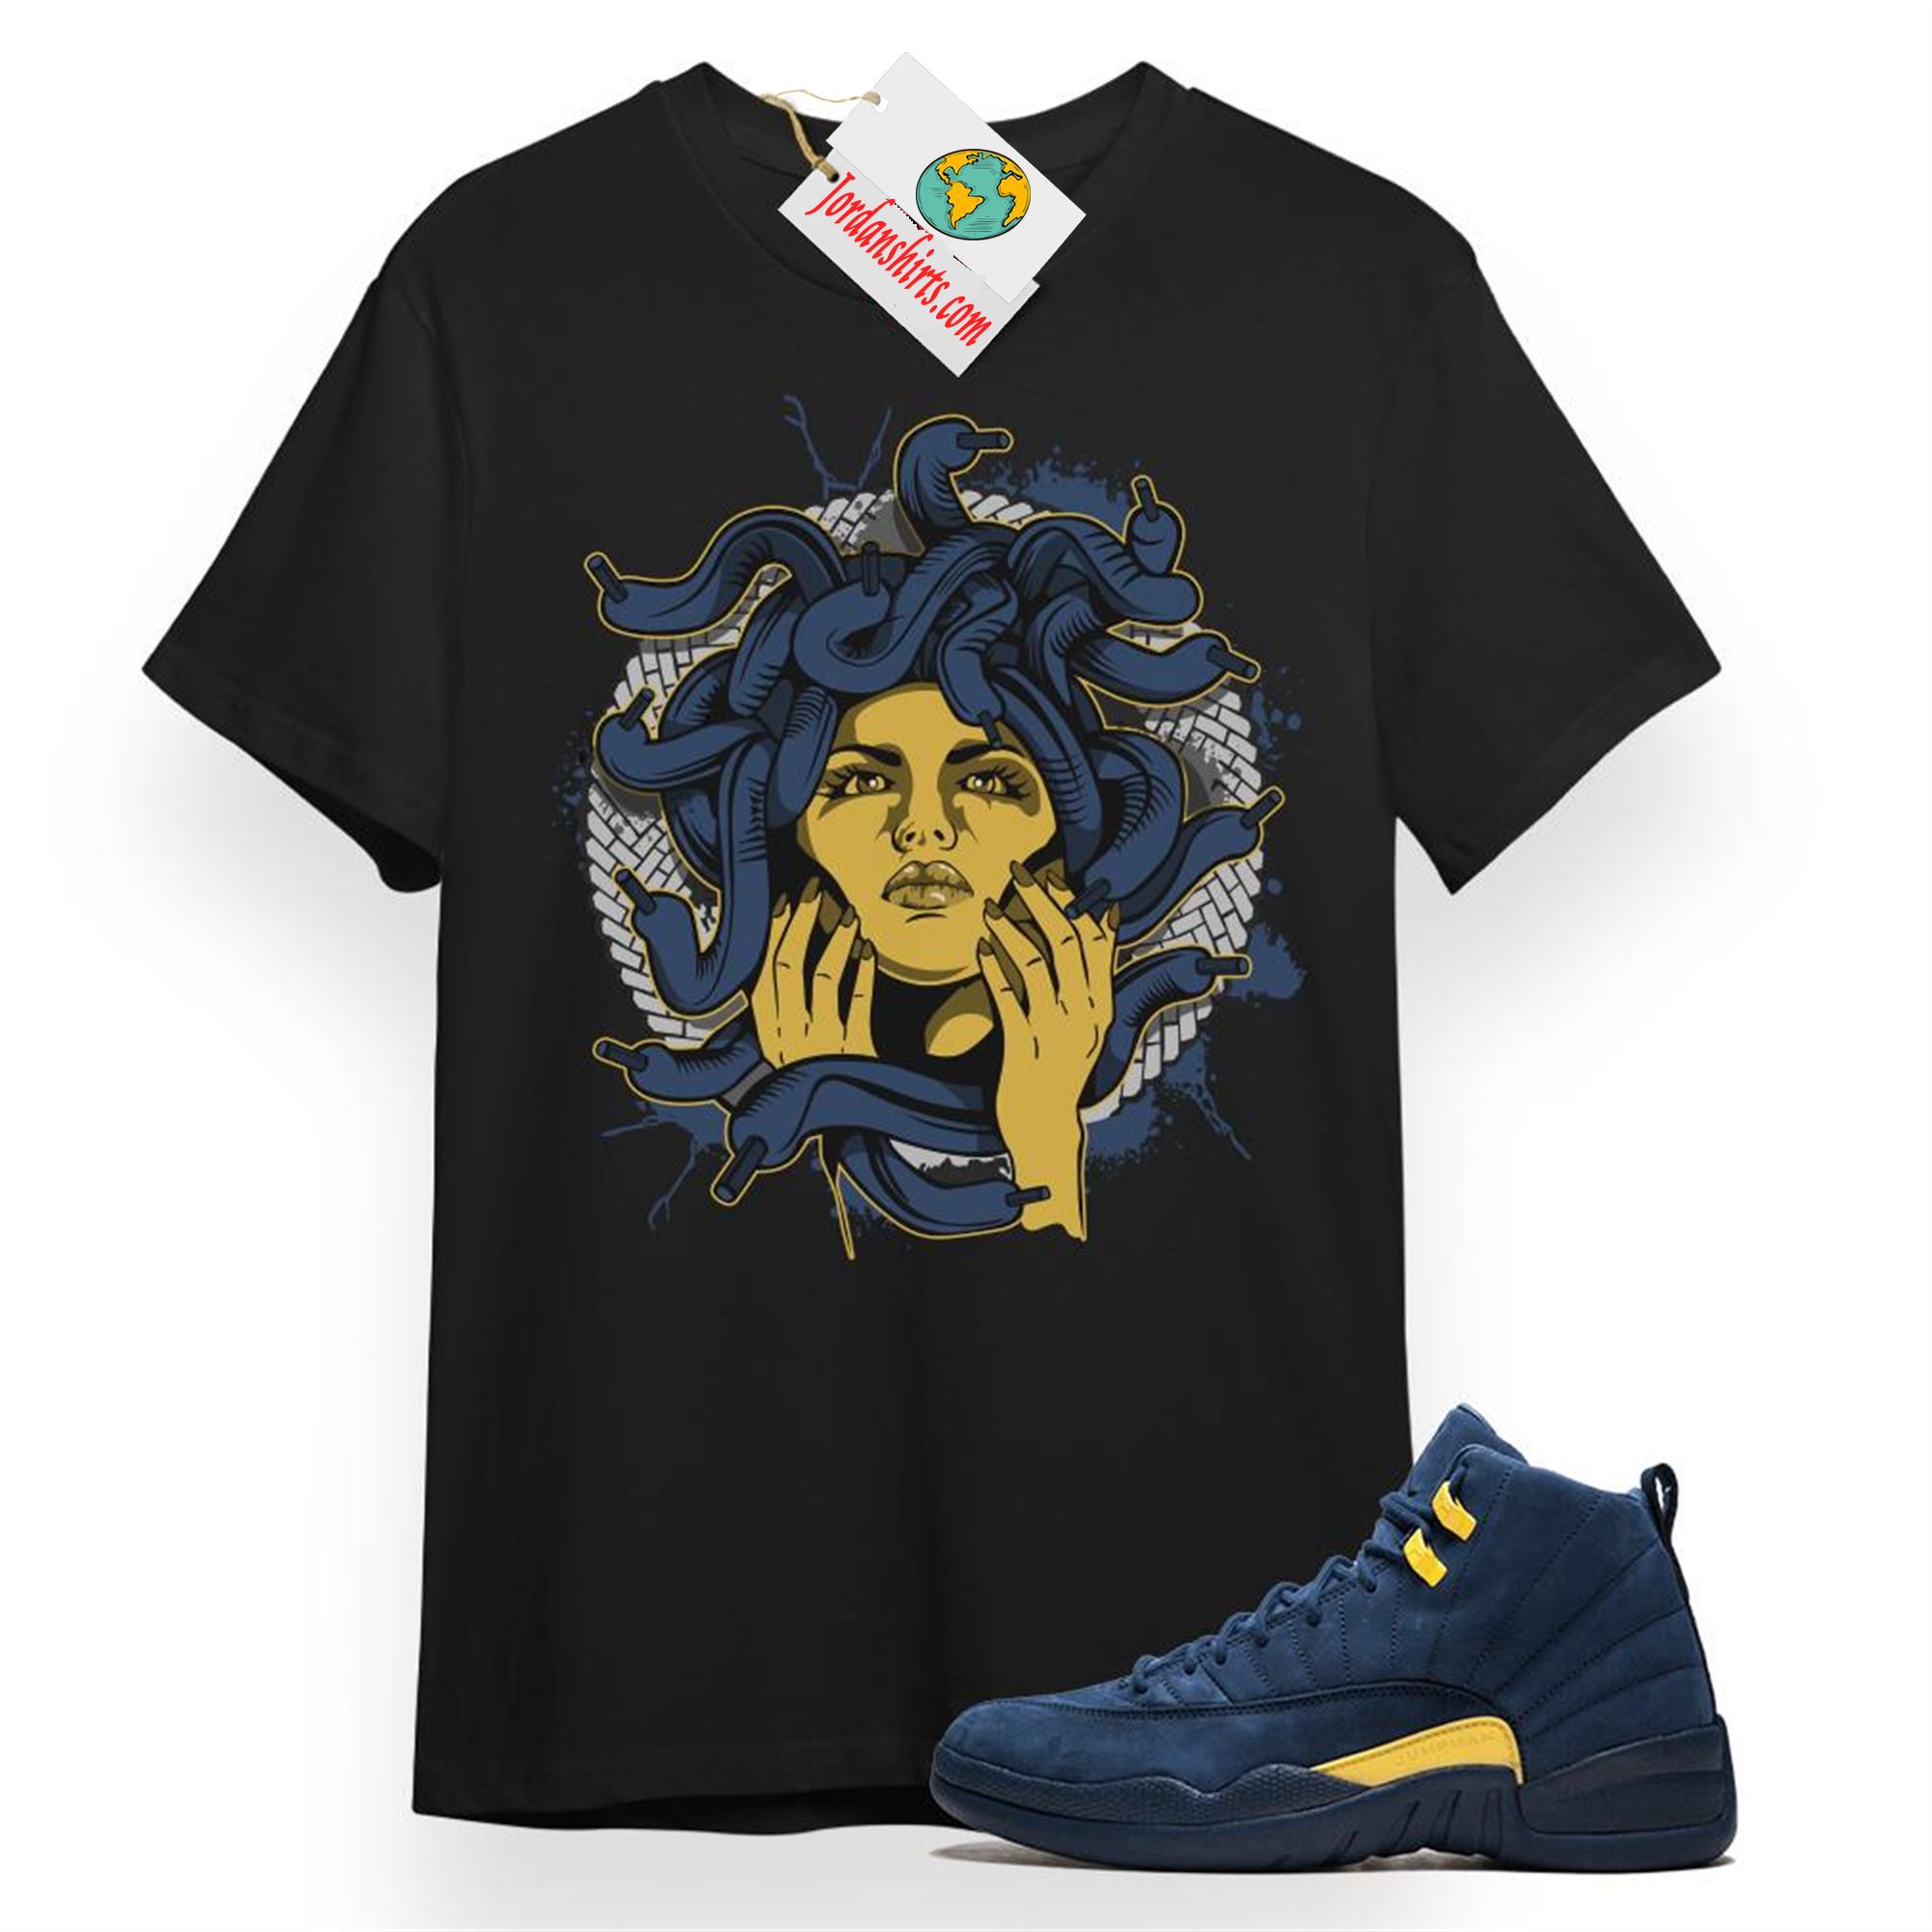 Jordan 12 Shirt, Medusa Black T-shirt Air Jordan 12 Michigan 12s Full Size Up To 5xl